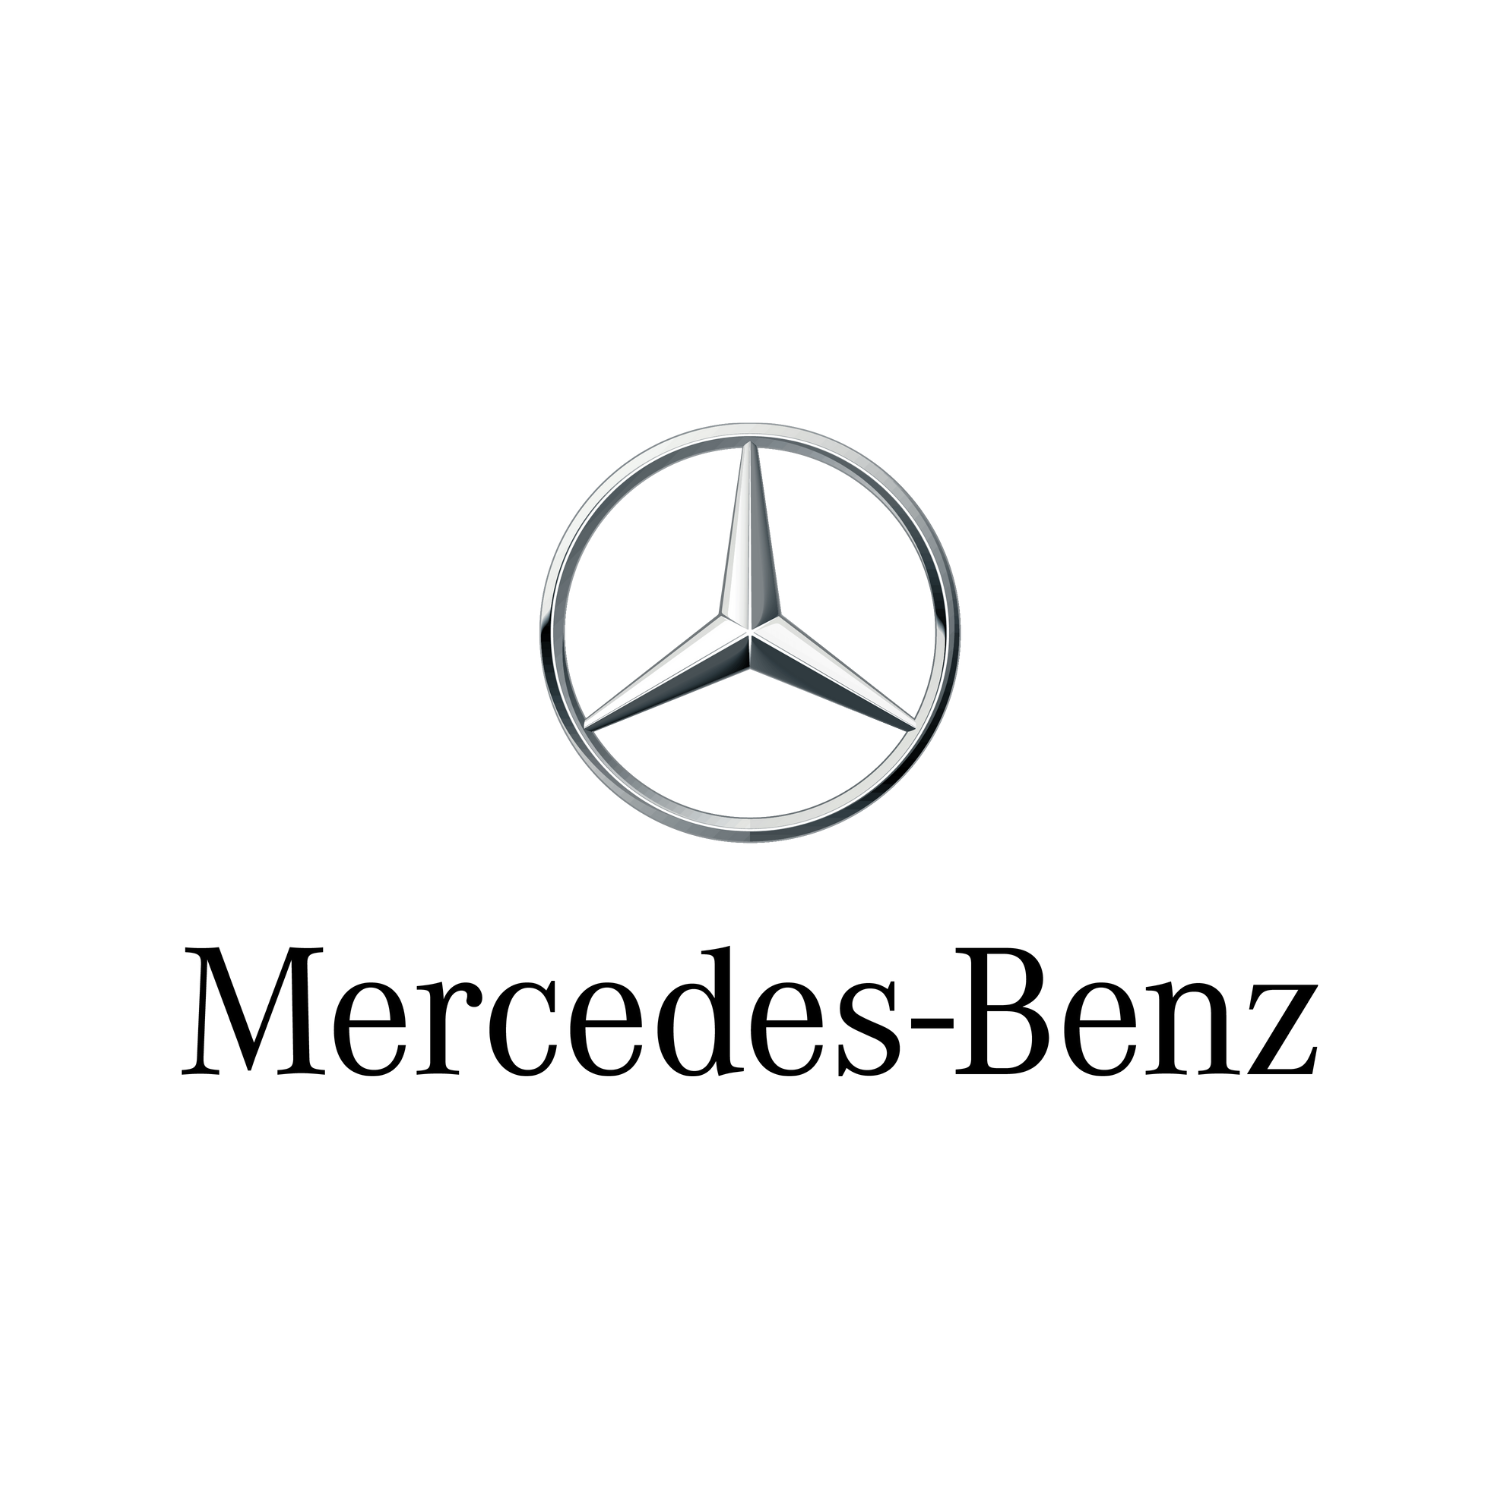 referanslarimiz Mercedes benz